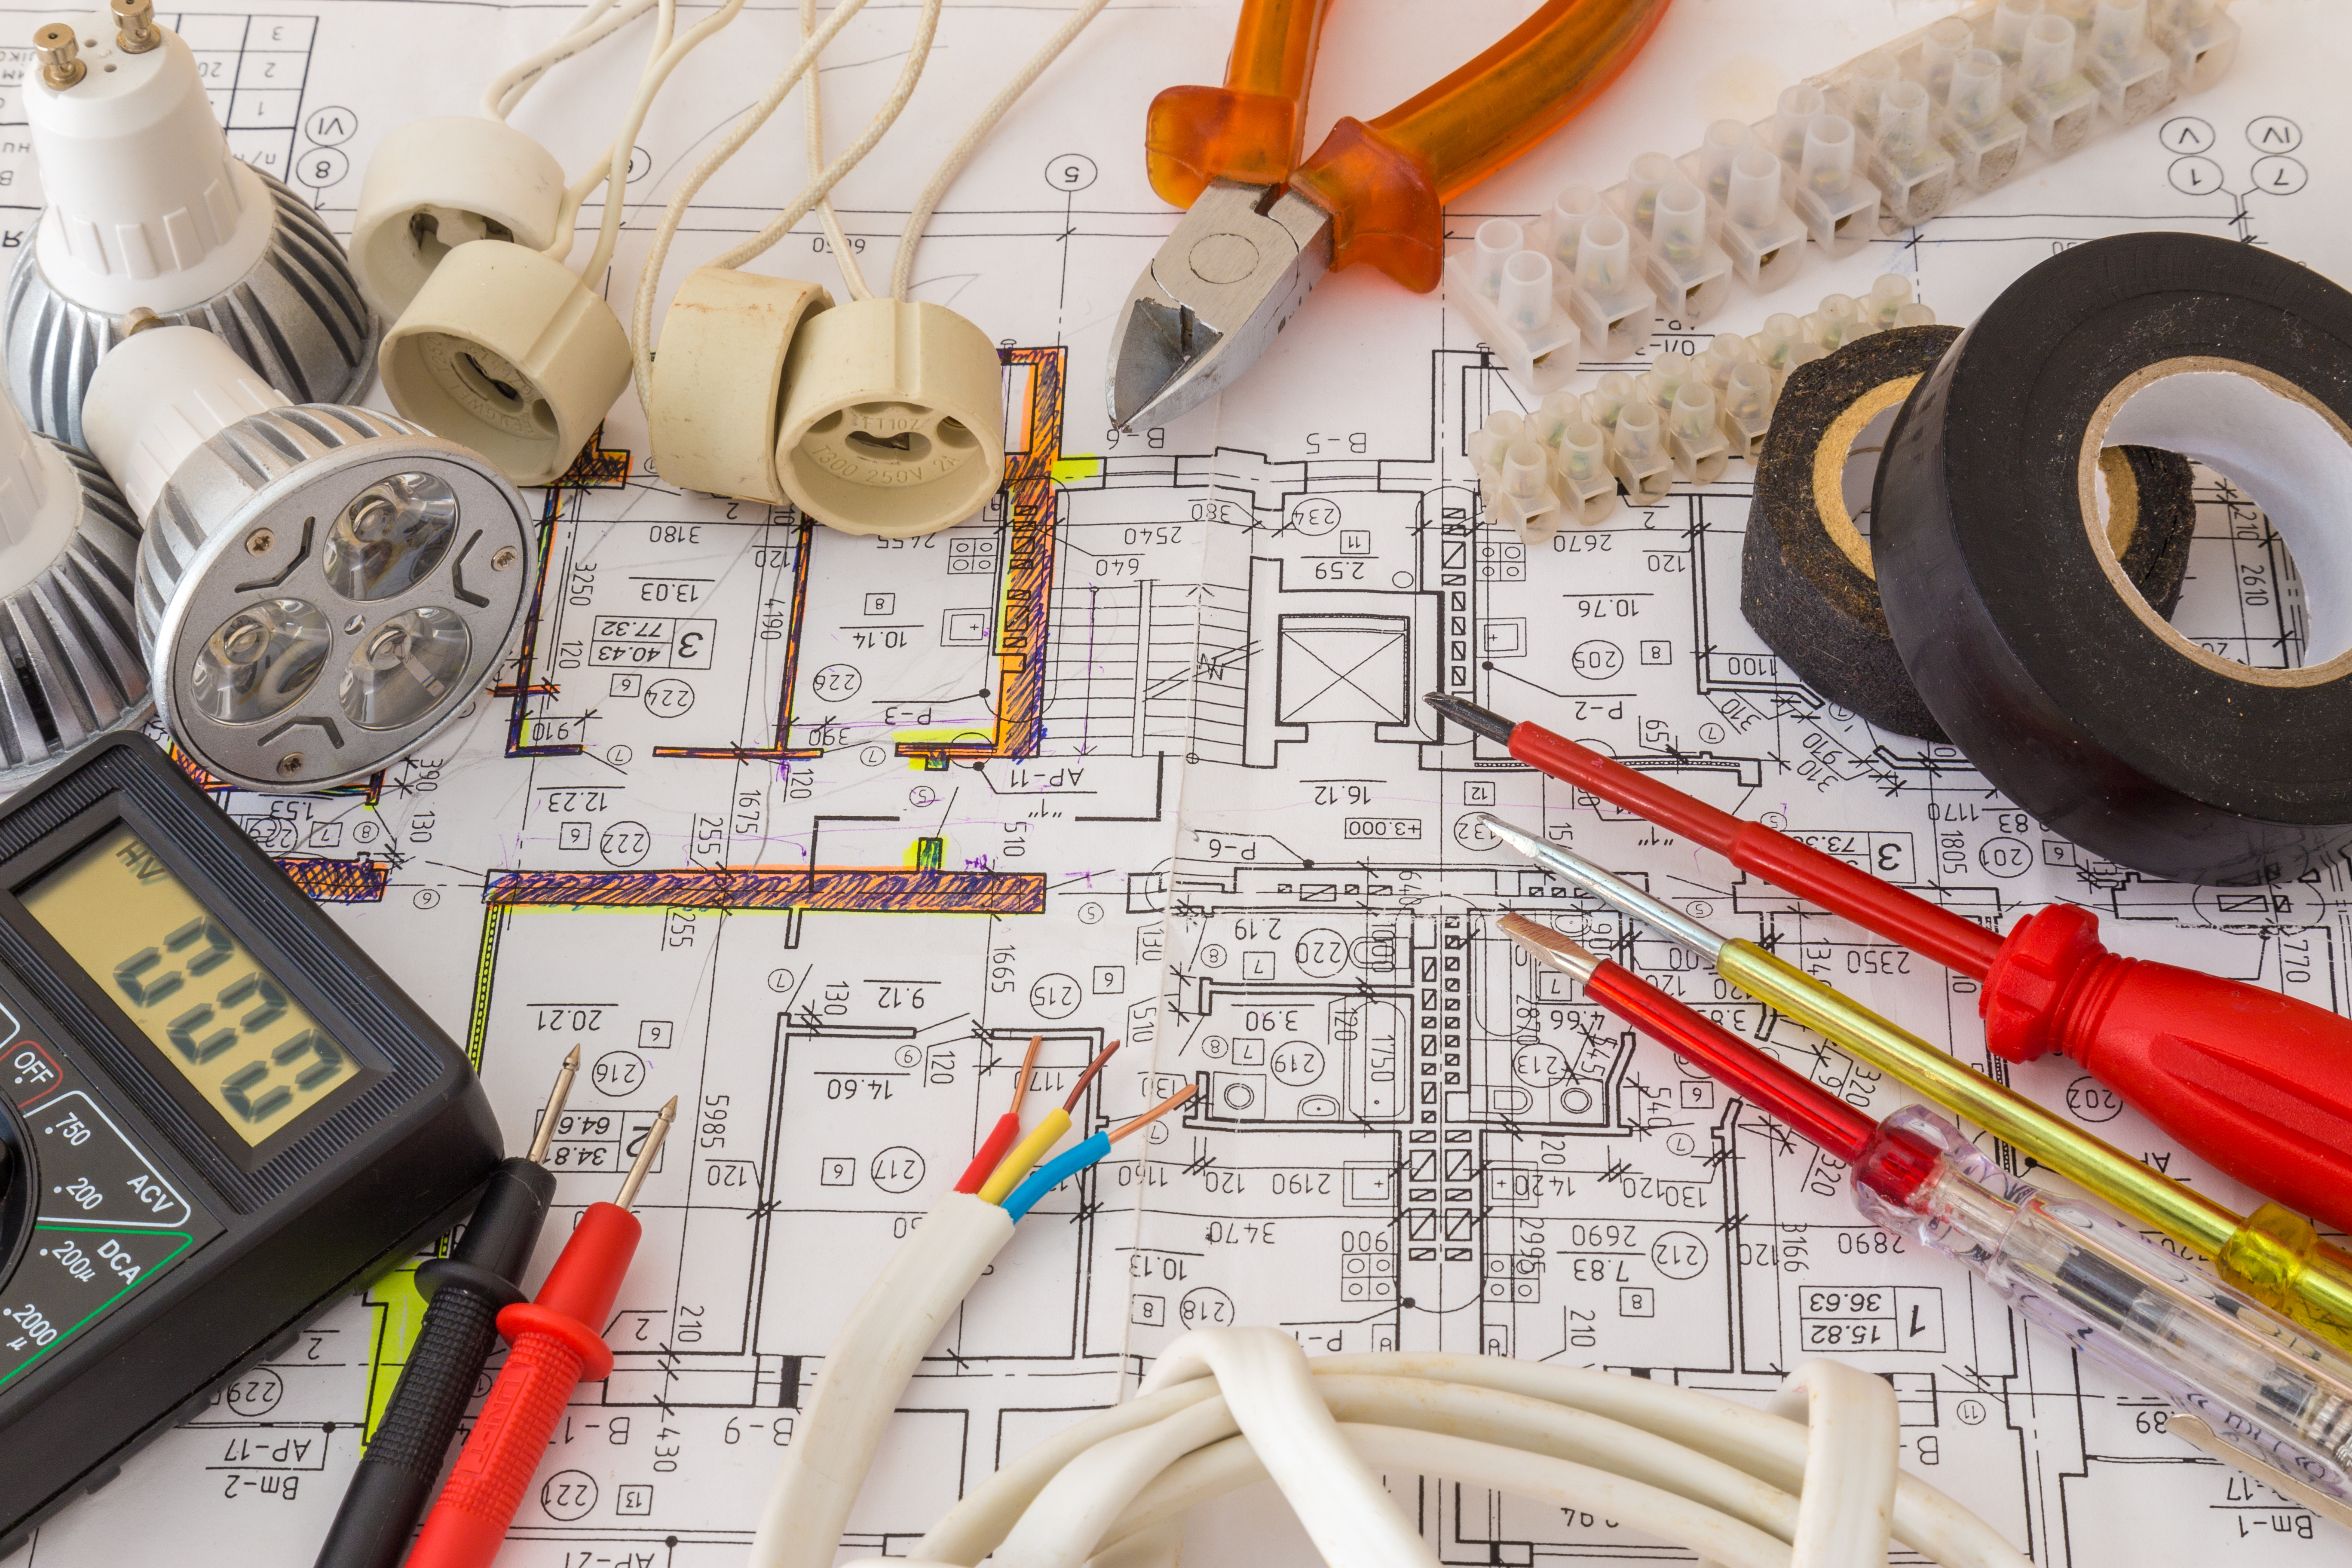 Electrical components arranged on building blueprints